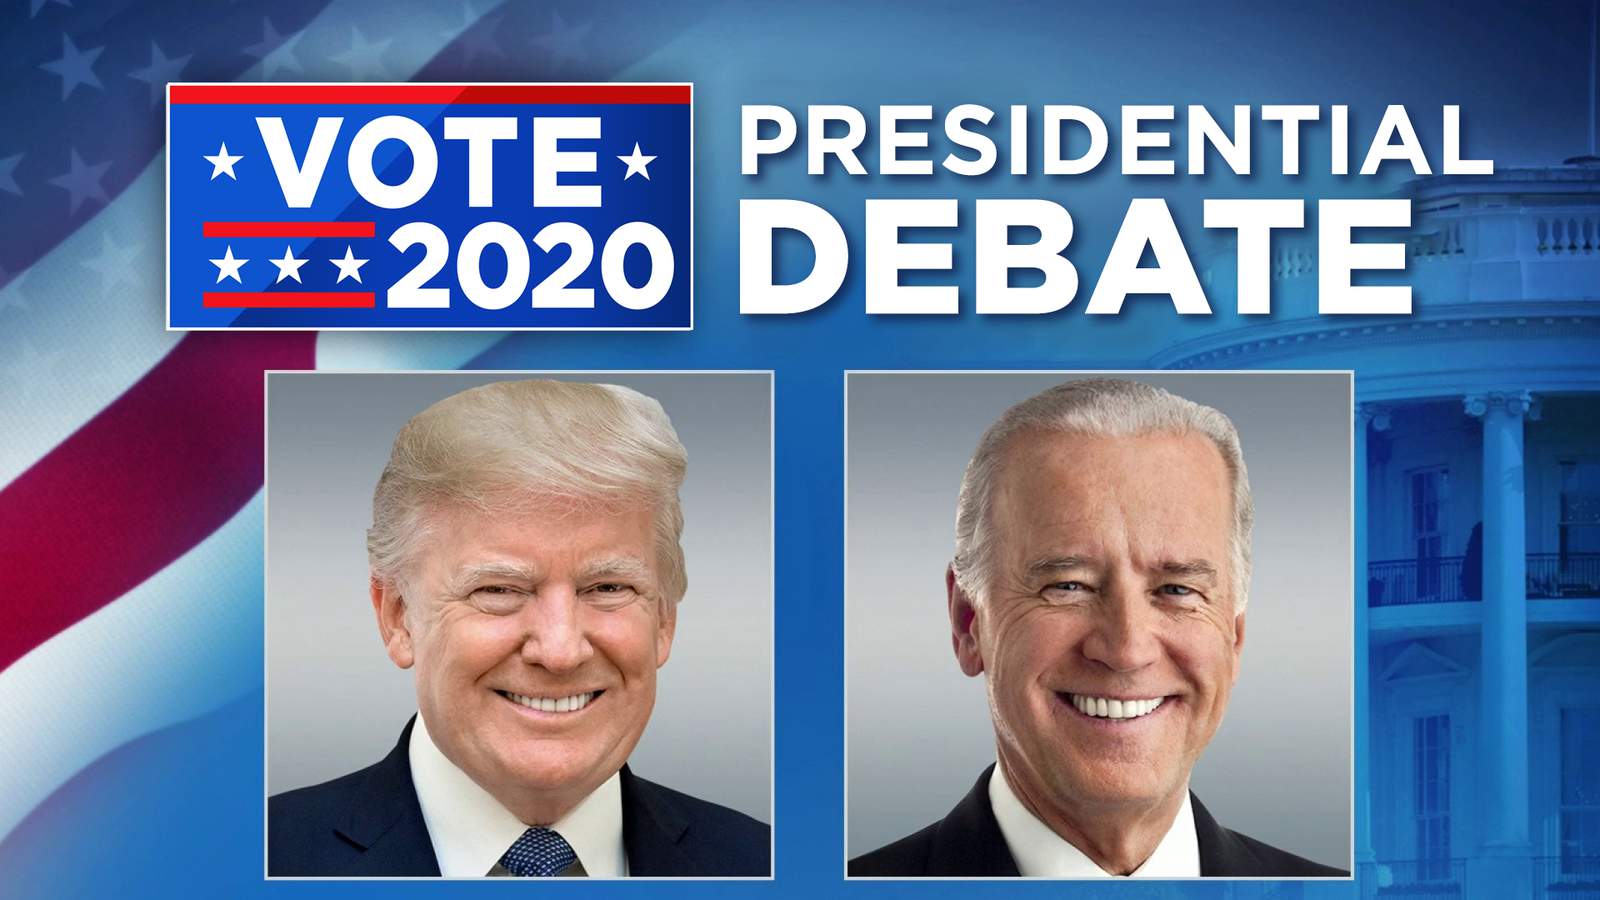 WATCH LIVE: Trump, Biden in first Presidential Debate on Sept. 29, 2020